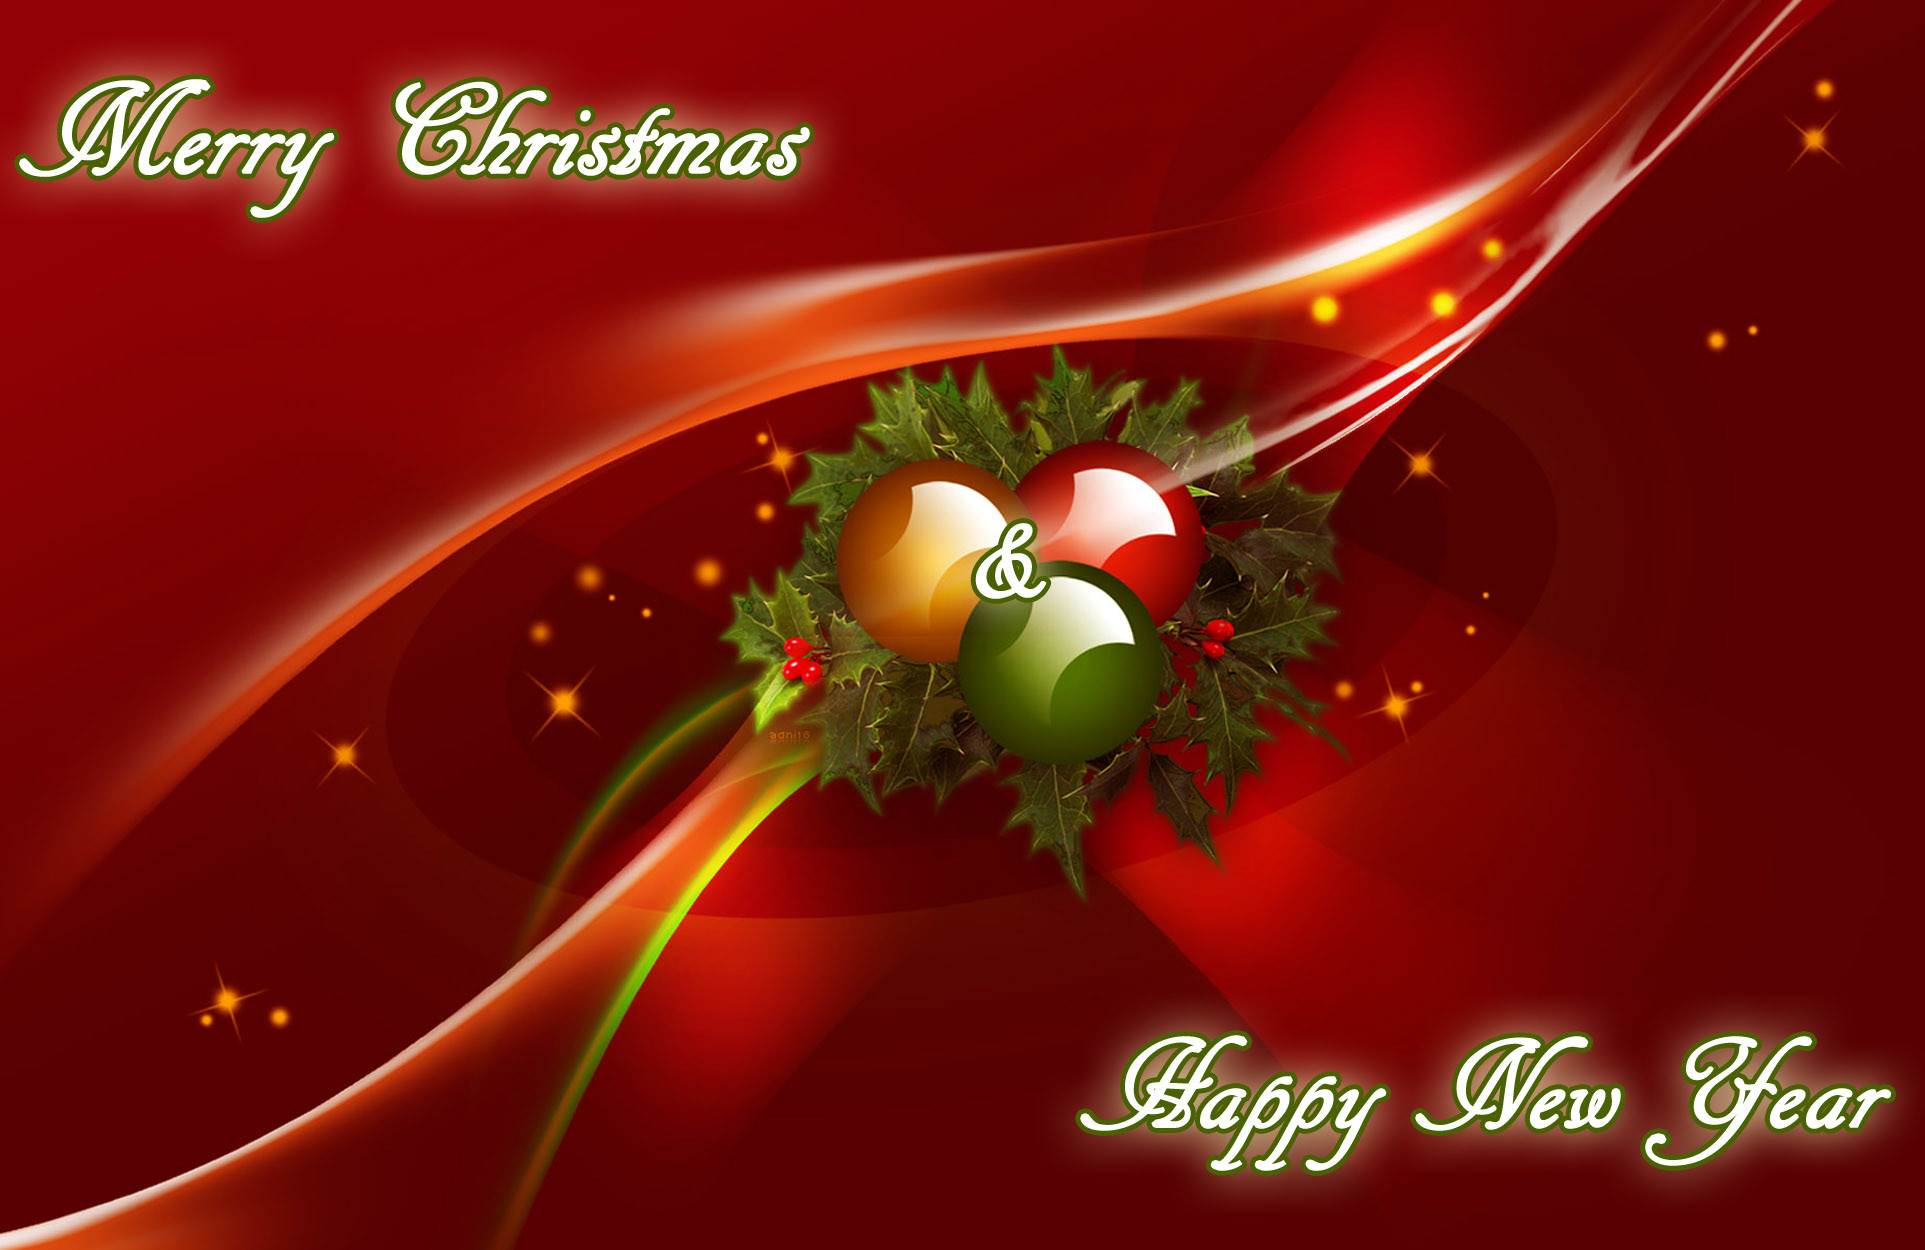 1925x1250 E Greeting Christmas Cards Merry Christmas Happy New Year 2018  E%20greeting%20christmas%20cards%20%20new Year 2014 Christmas 2013 Wallpaper  Greeting E Cards ...